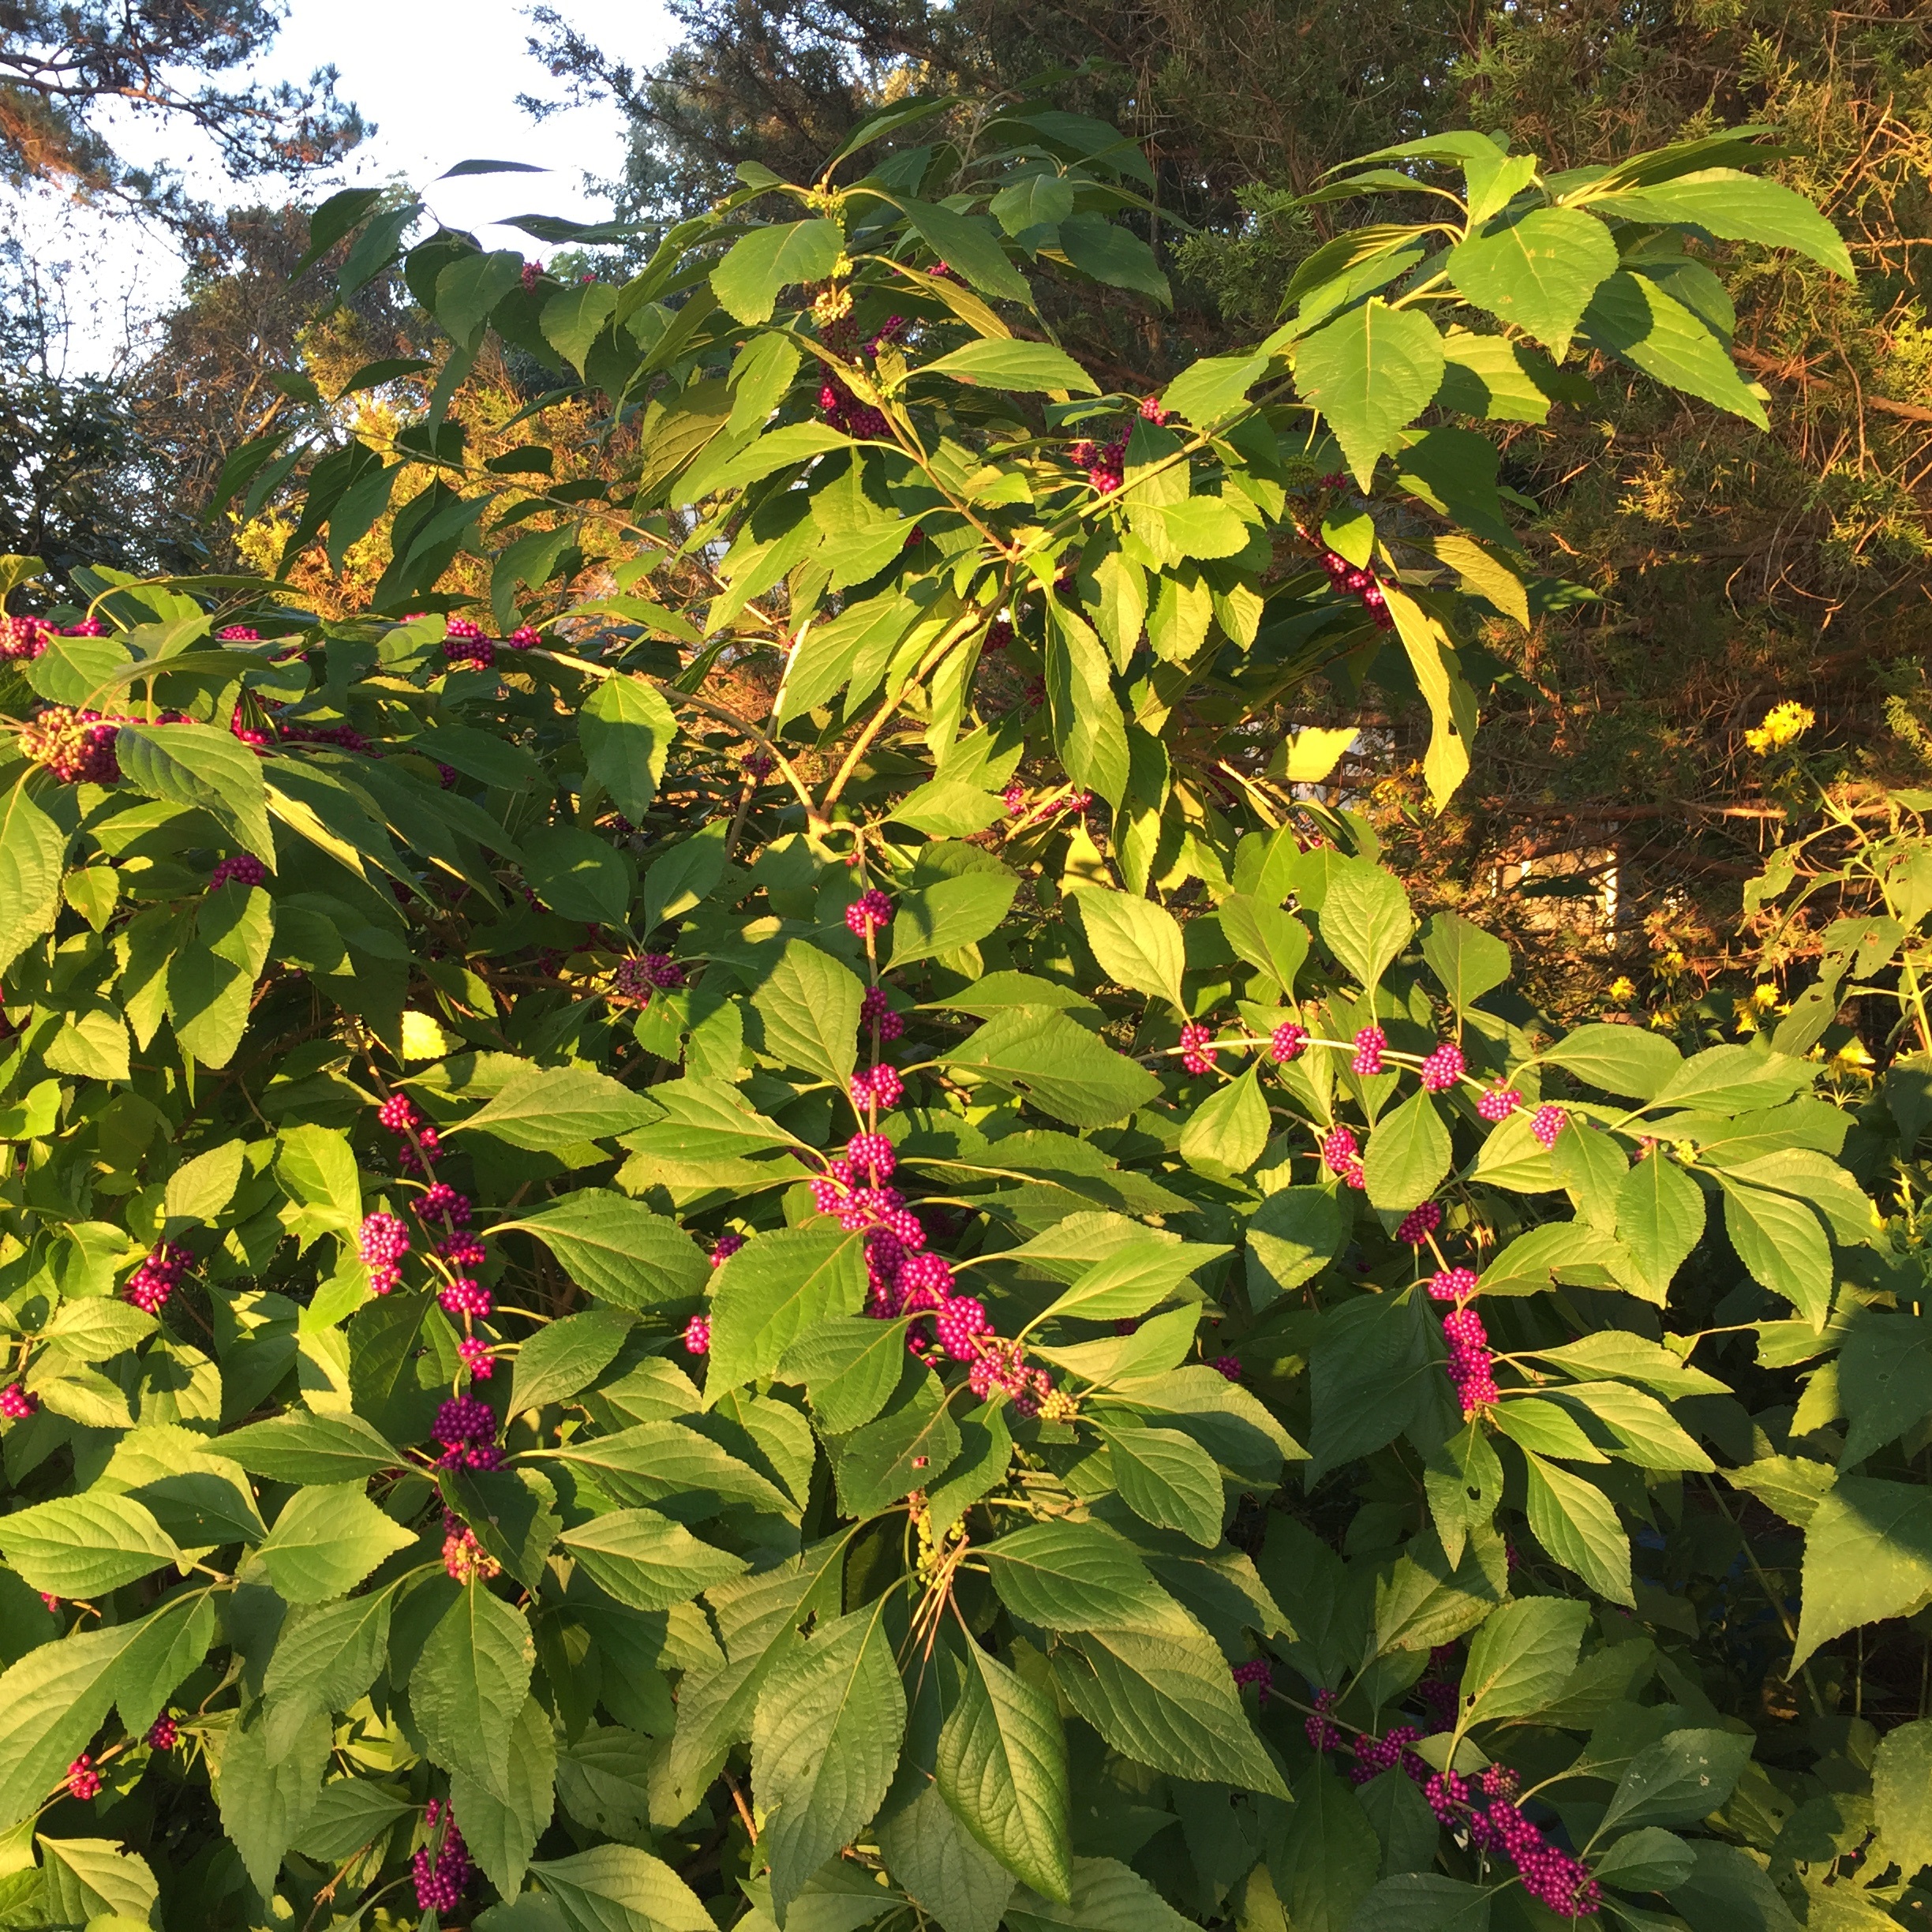 Callicarpa americana (Verbenaceae) – Beautyberry